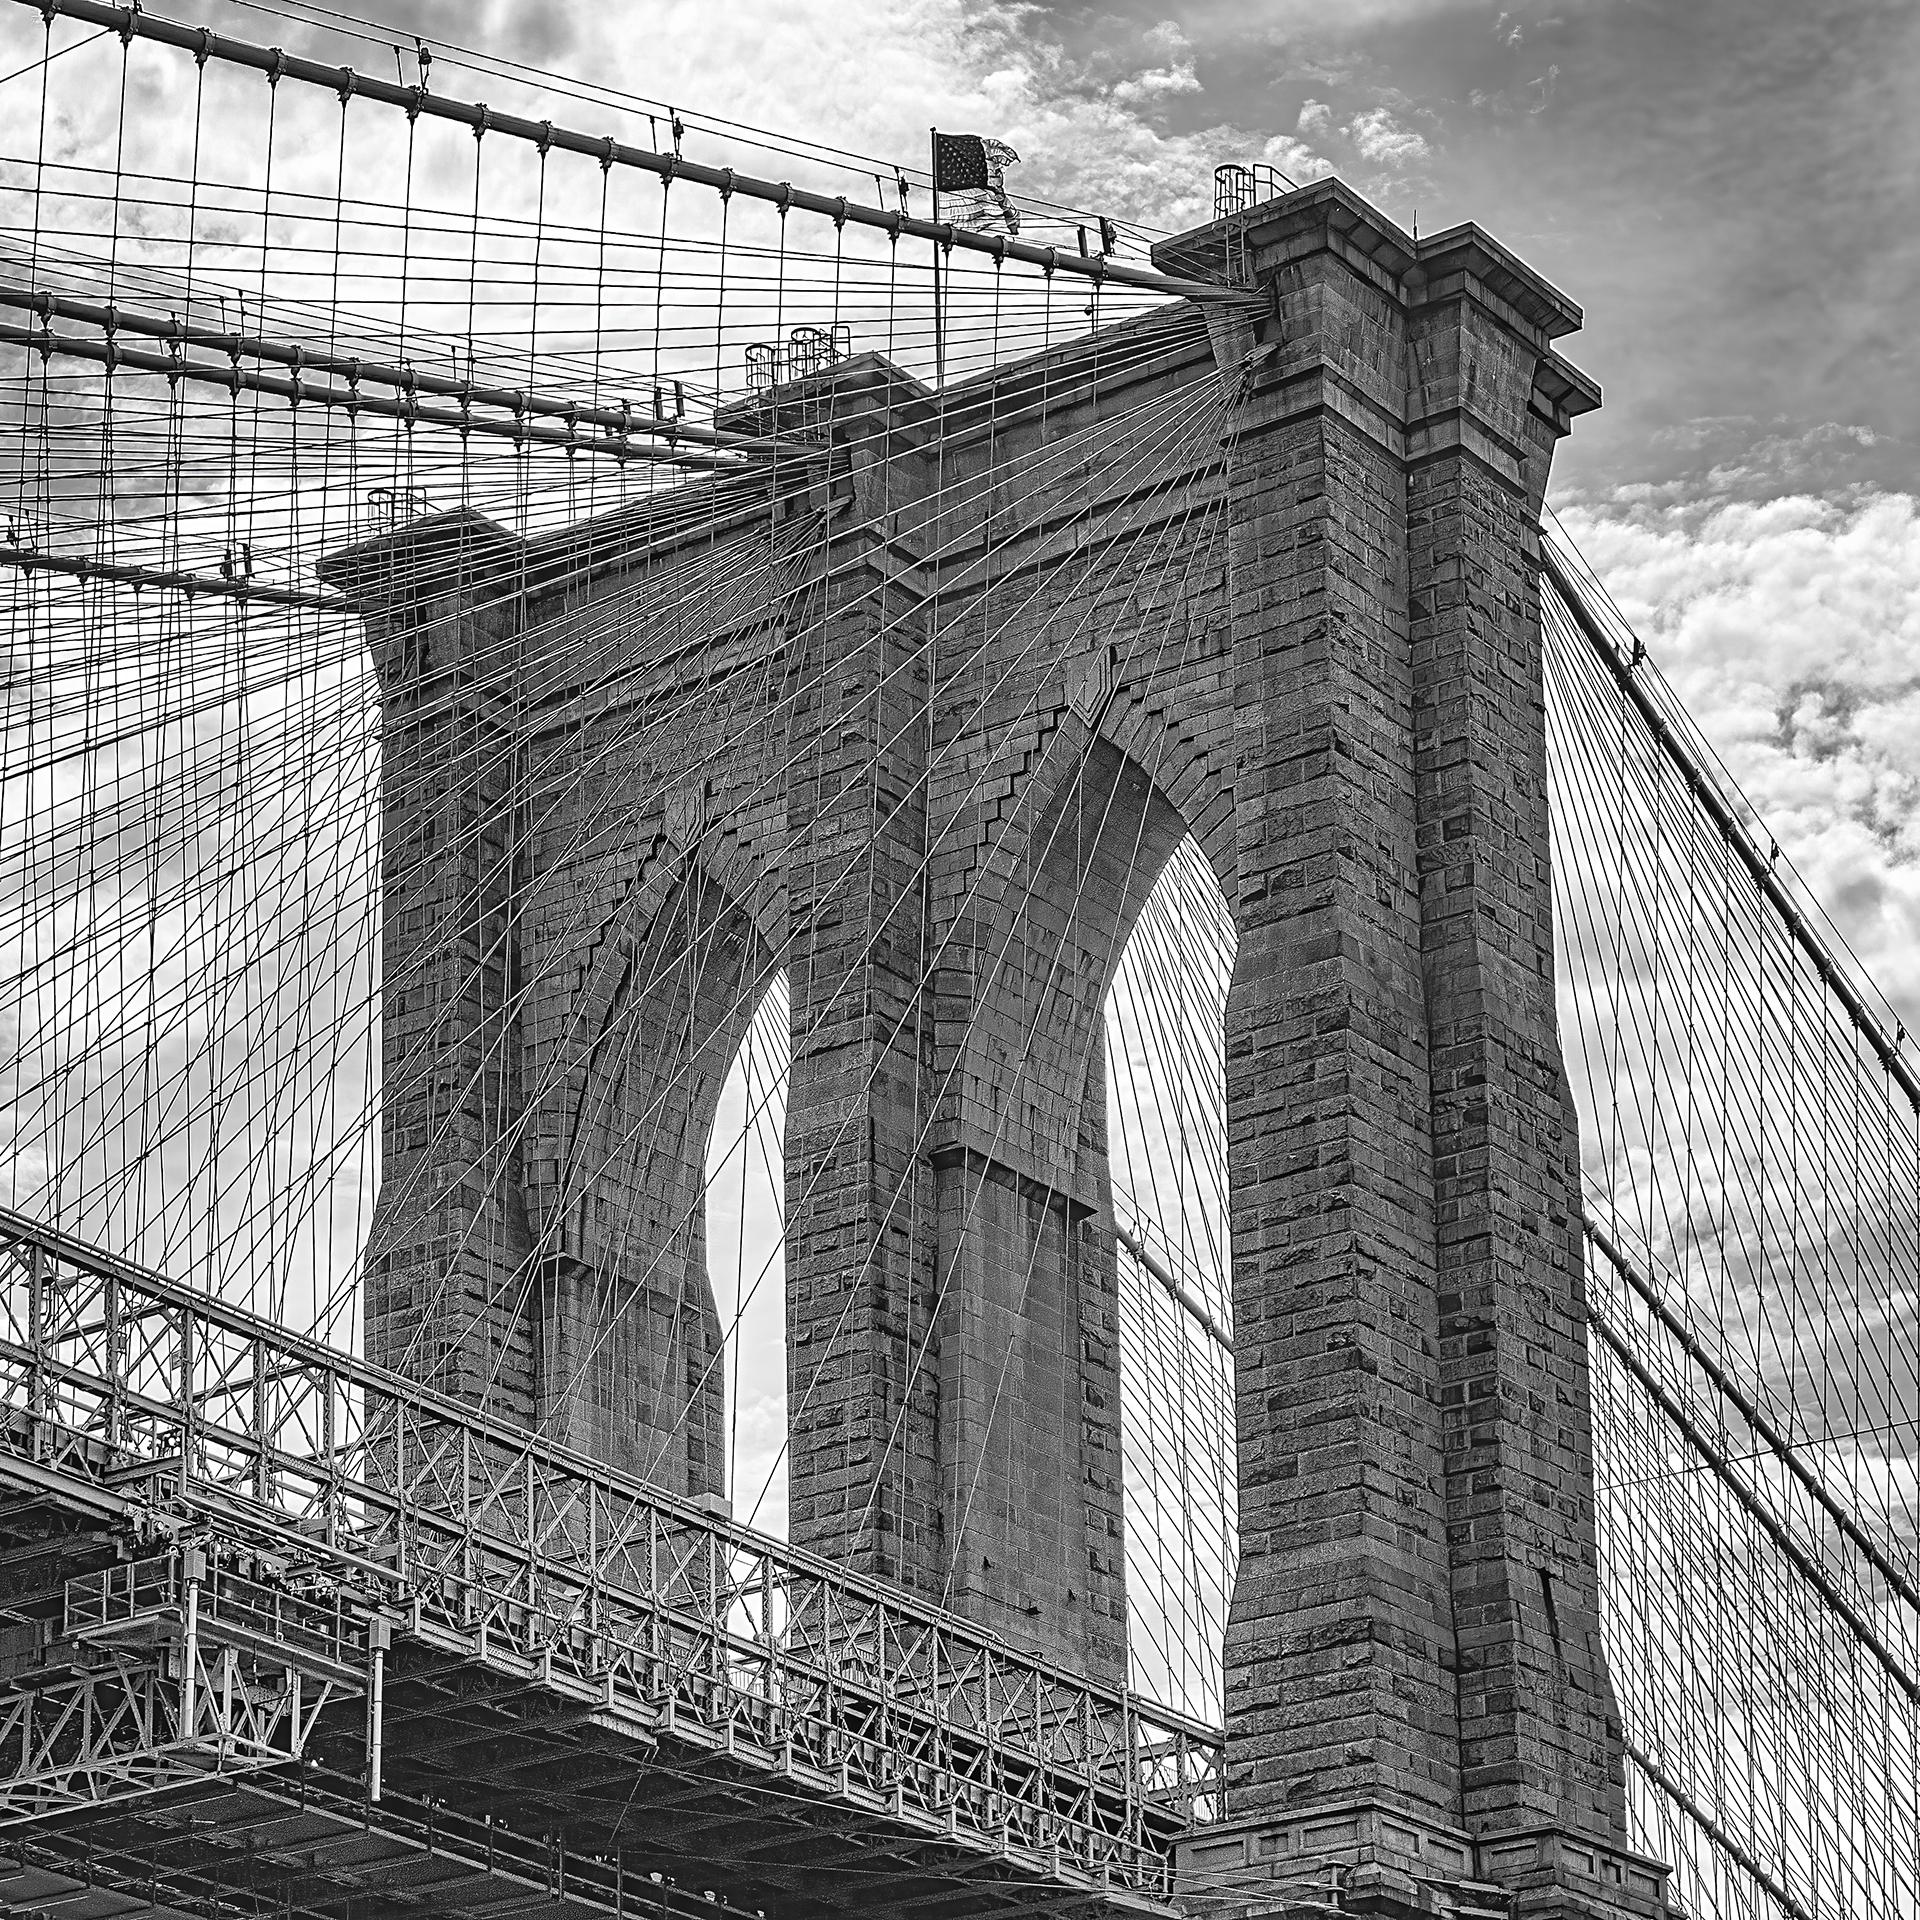 New York Photography Awards Winner - Brooklyn Bridge